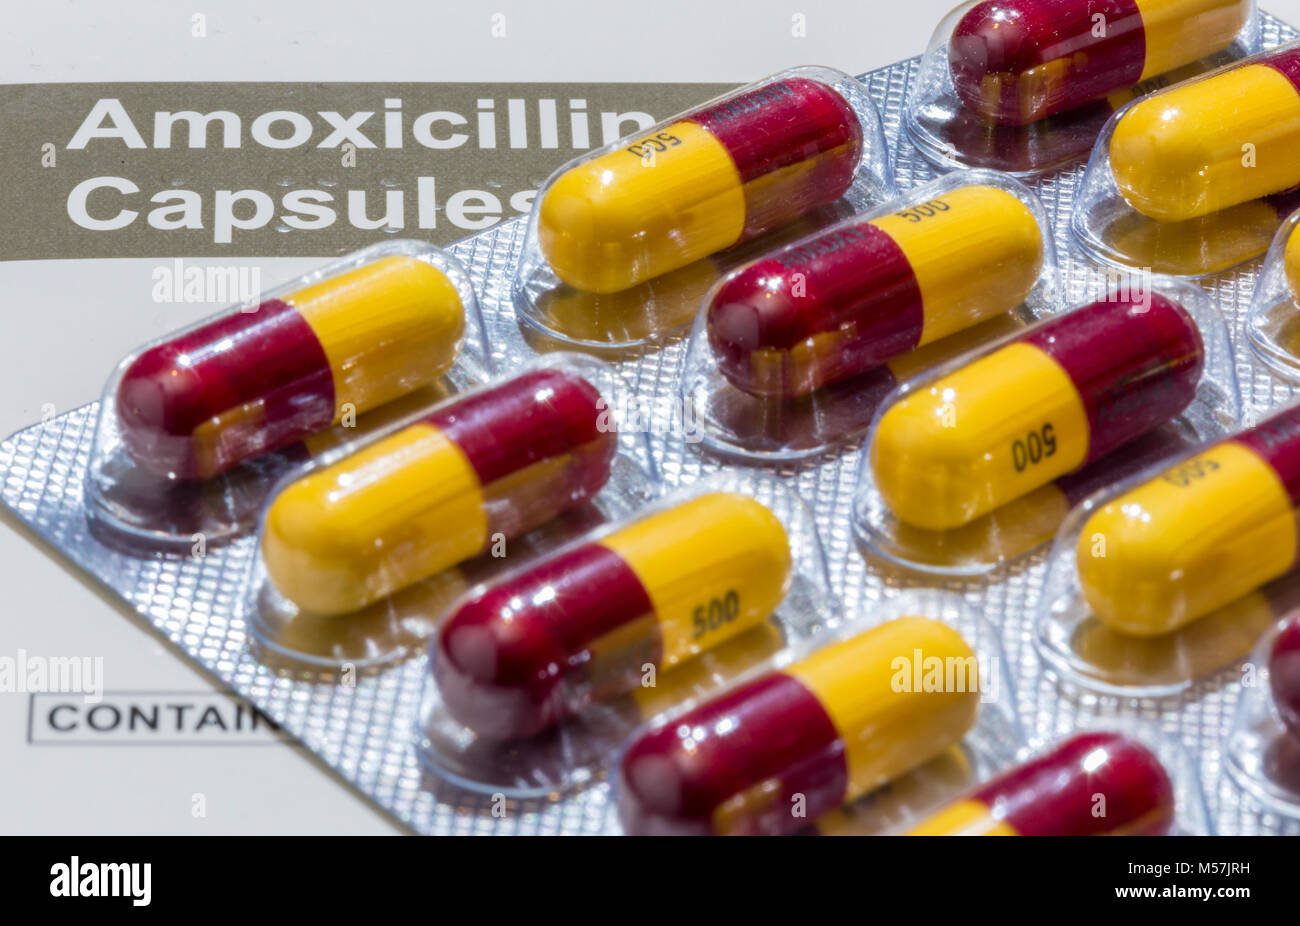 Amoxicillin capsules, antibiotics pills. Stock Photo